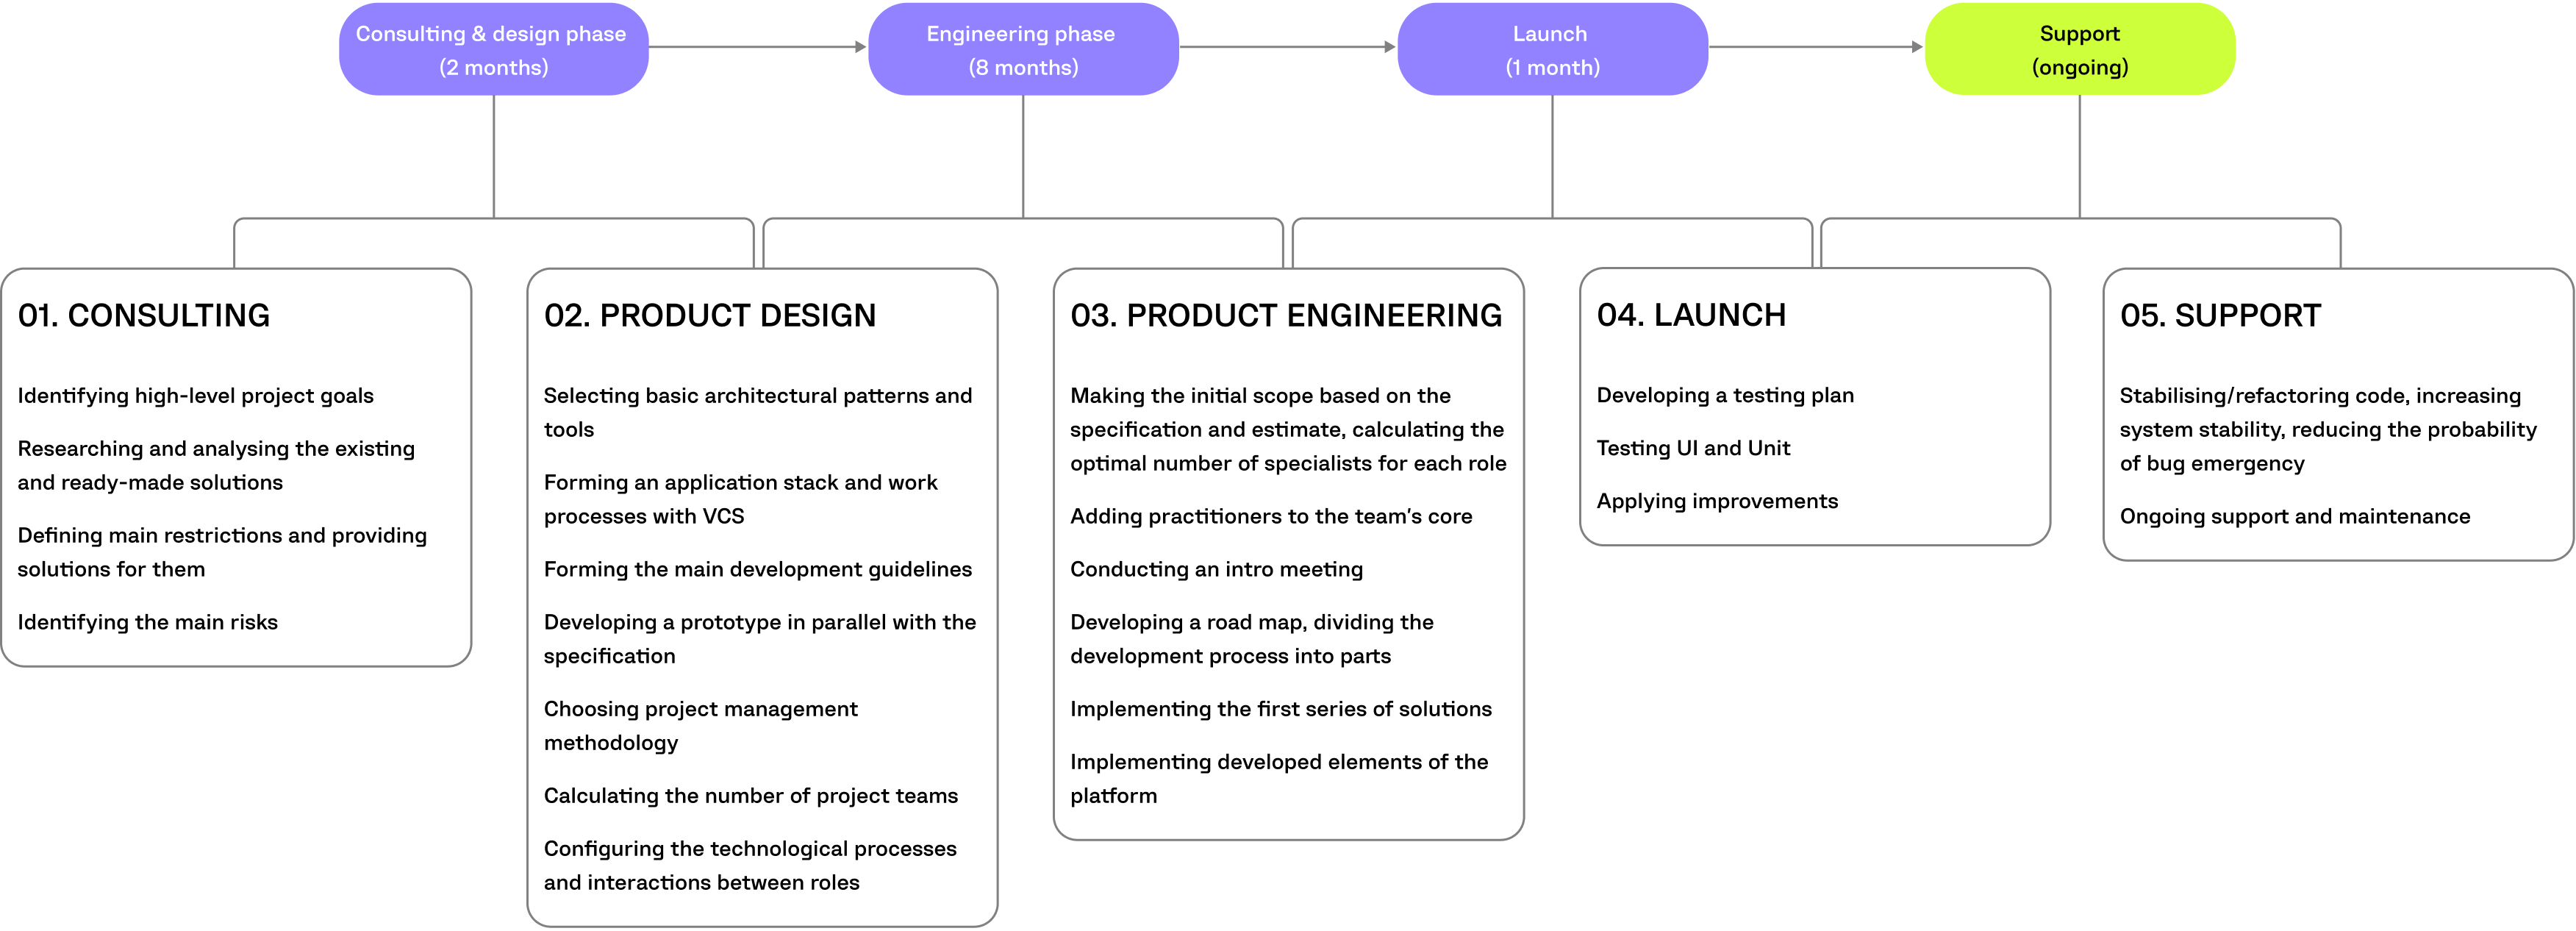 shipbuilding management app project timeline